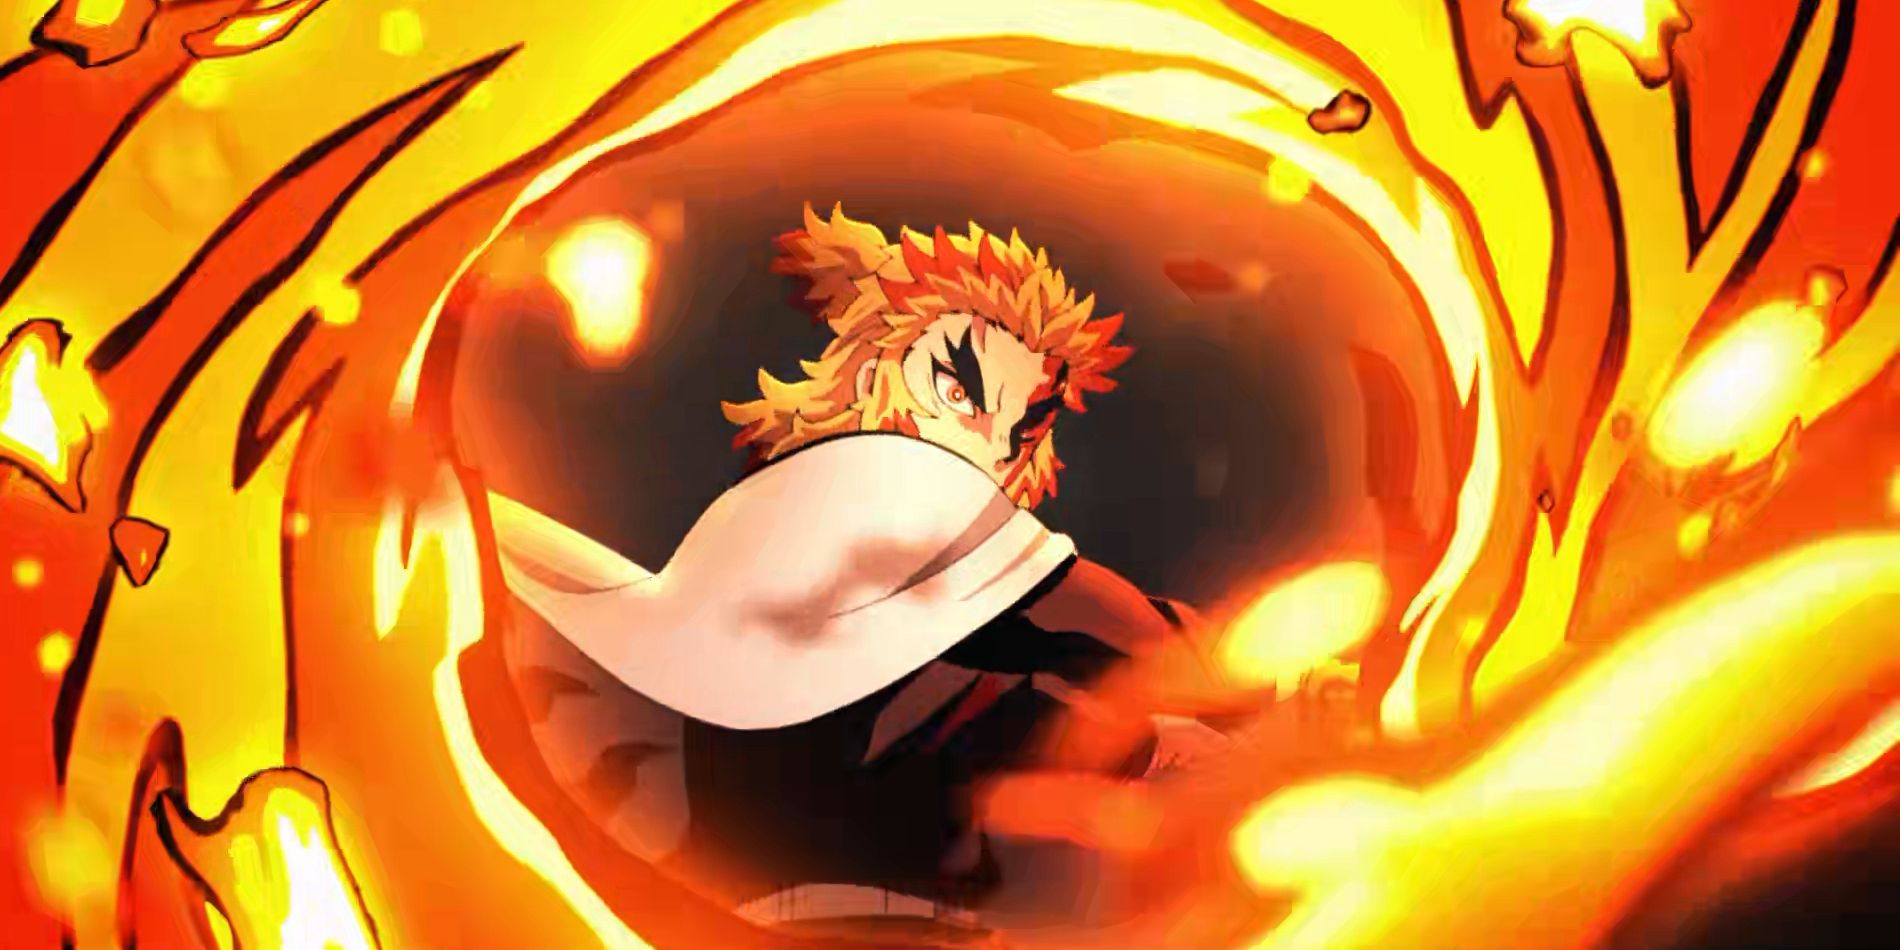 Demon Slayer's Kyojuro Rengoku in a ring of flames